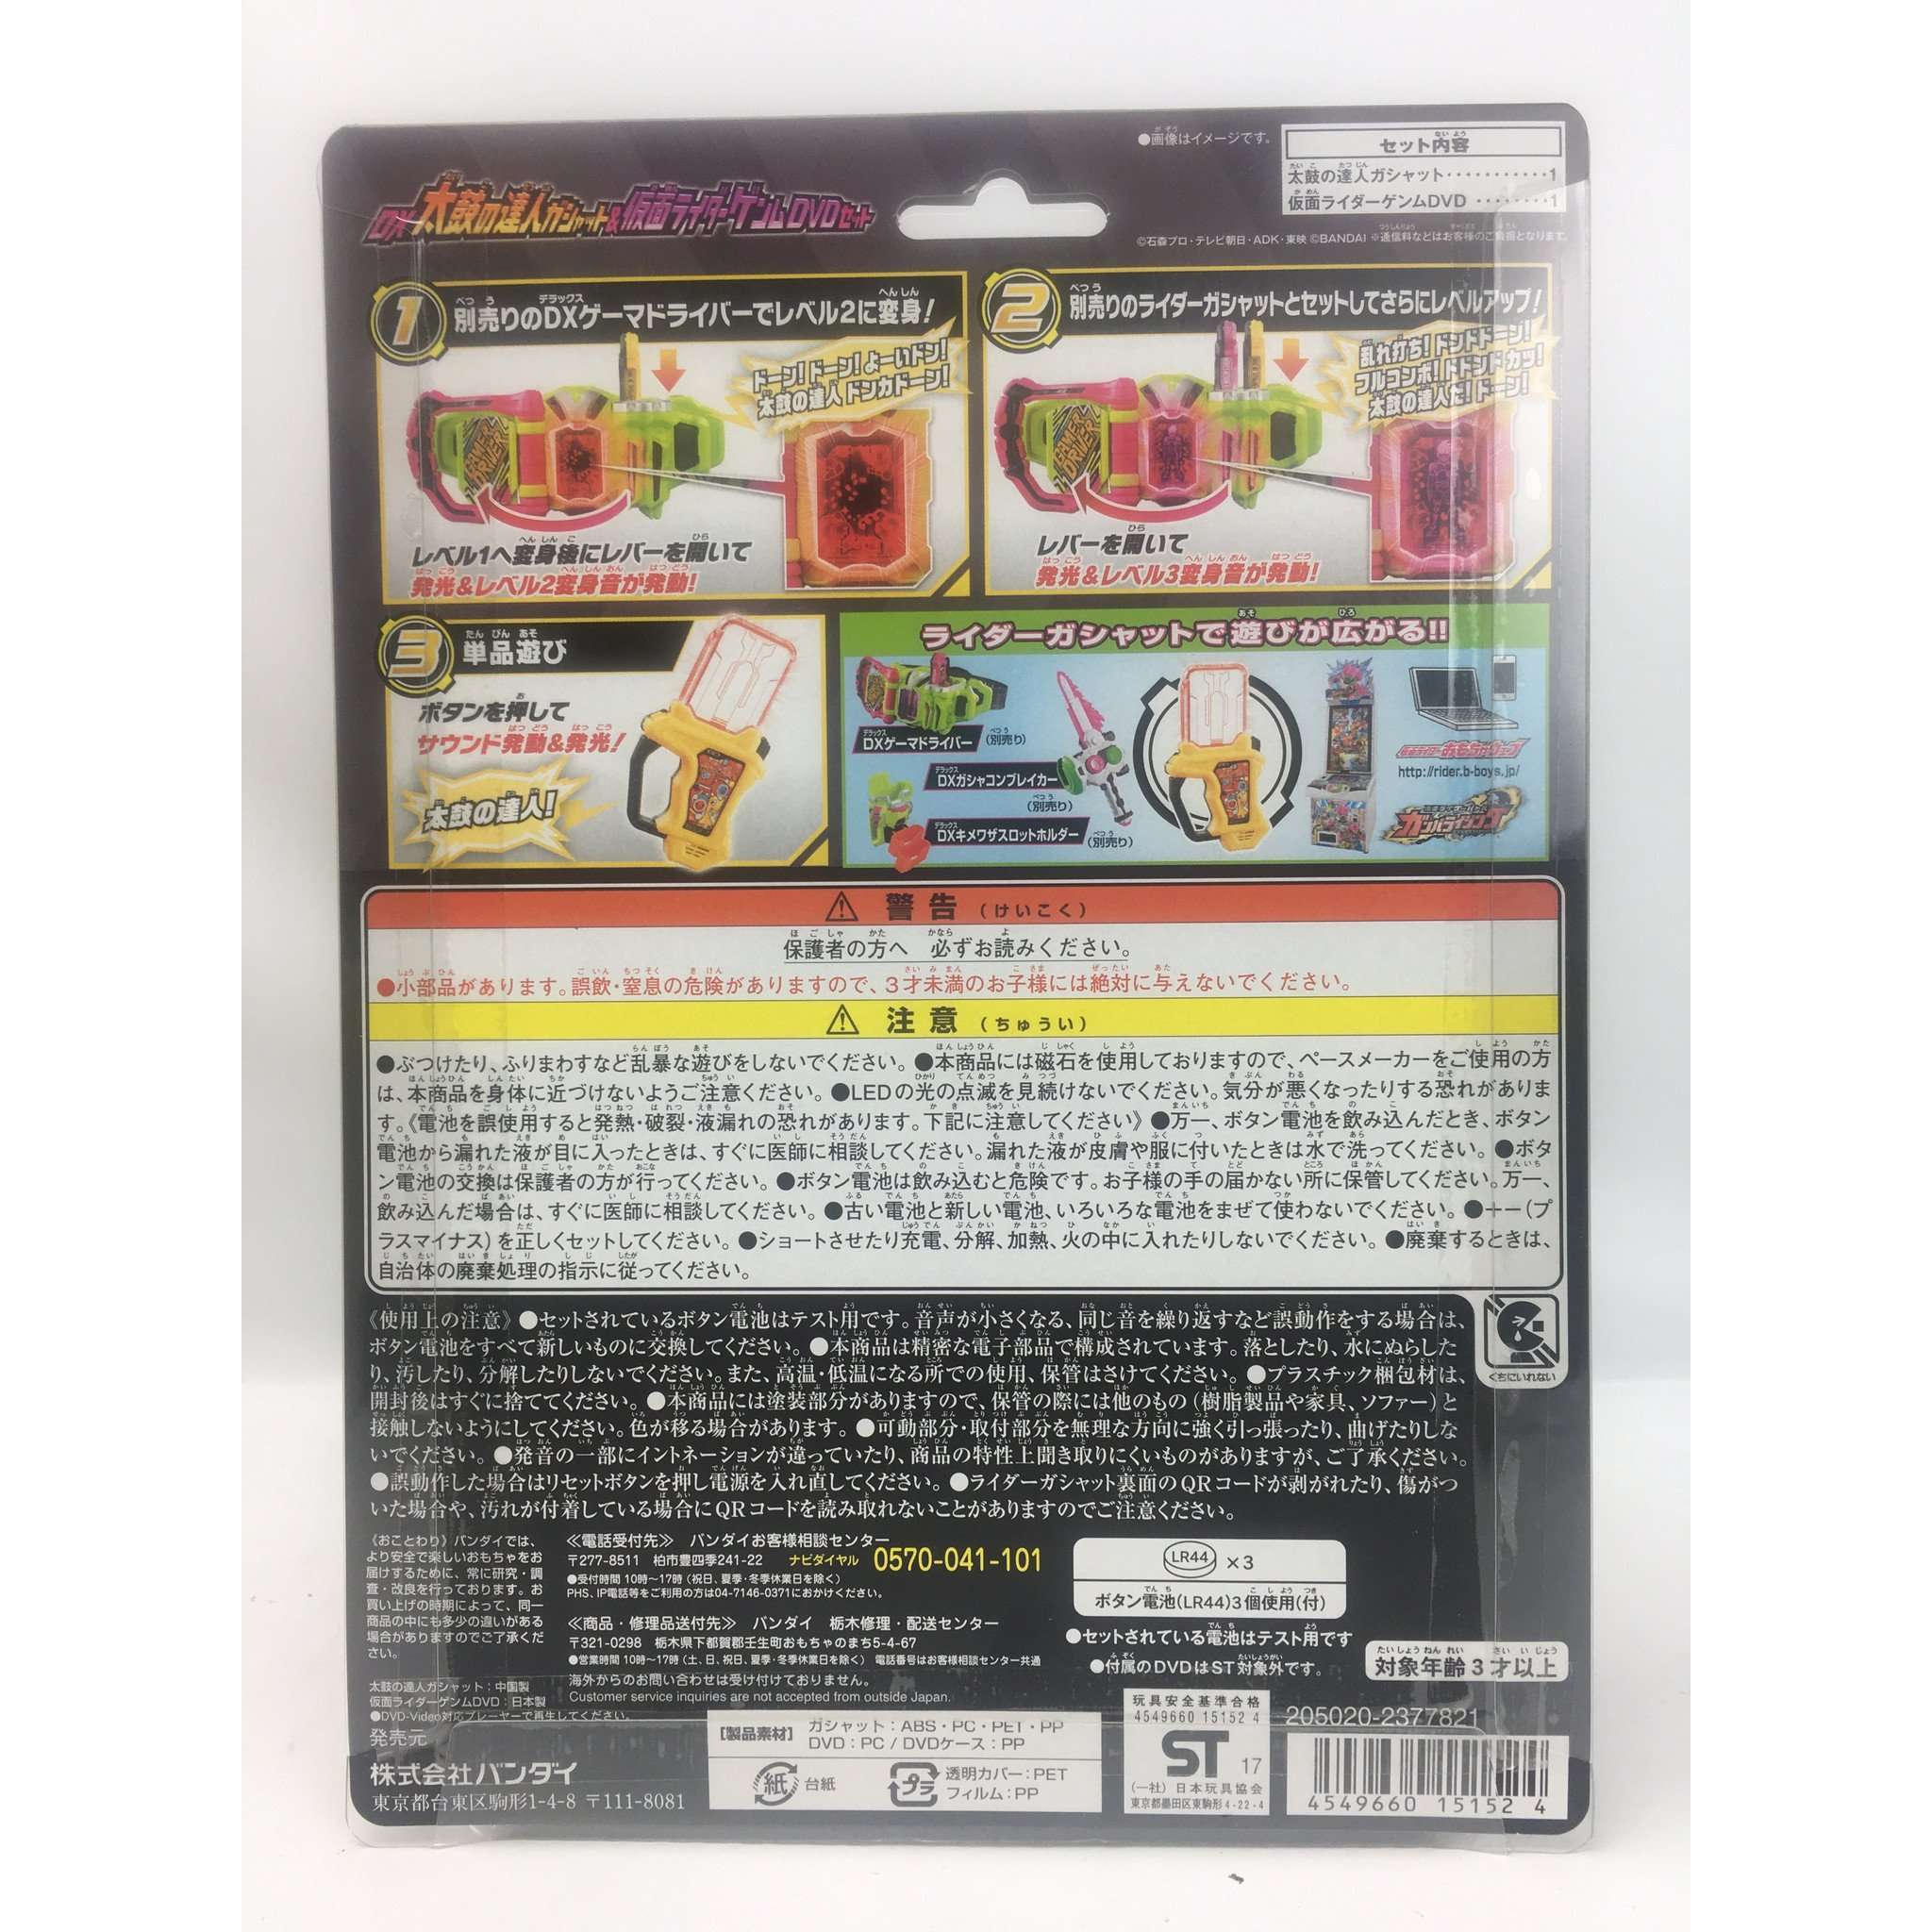 [BOXED] Kamen Rider Ex-Aid - RGS DX Taiko no Tatsujin (Taiko Drum Master)  Gashat & Genm DVD Set